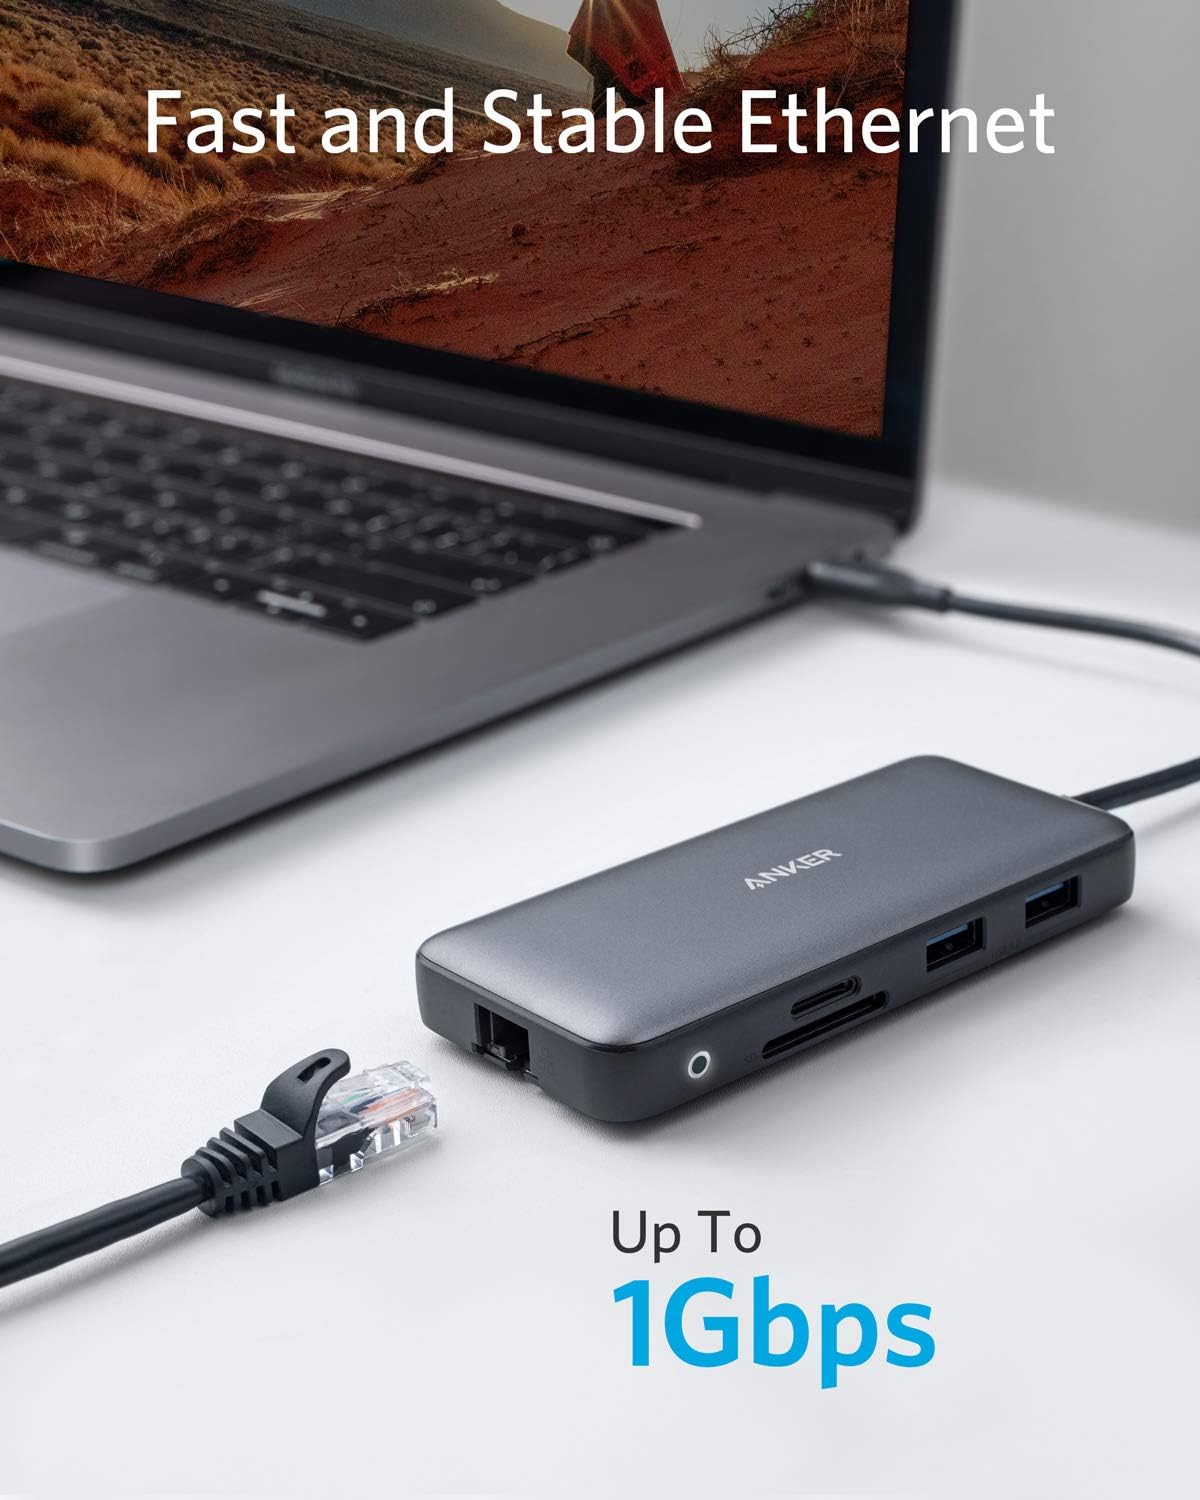 Anker 553 USB-C Hub, 8-in-1 USB C Dock, Dual 4K HDMI USB C to USB Adapter, 1 Gbps Ethernet USB Hub